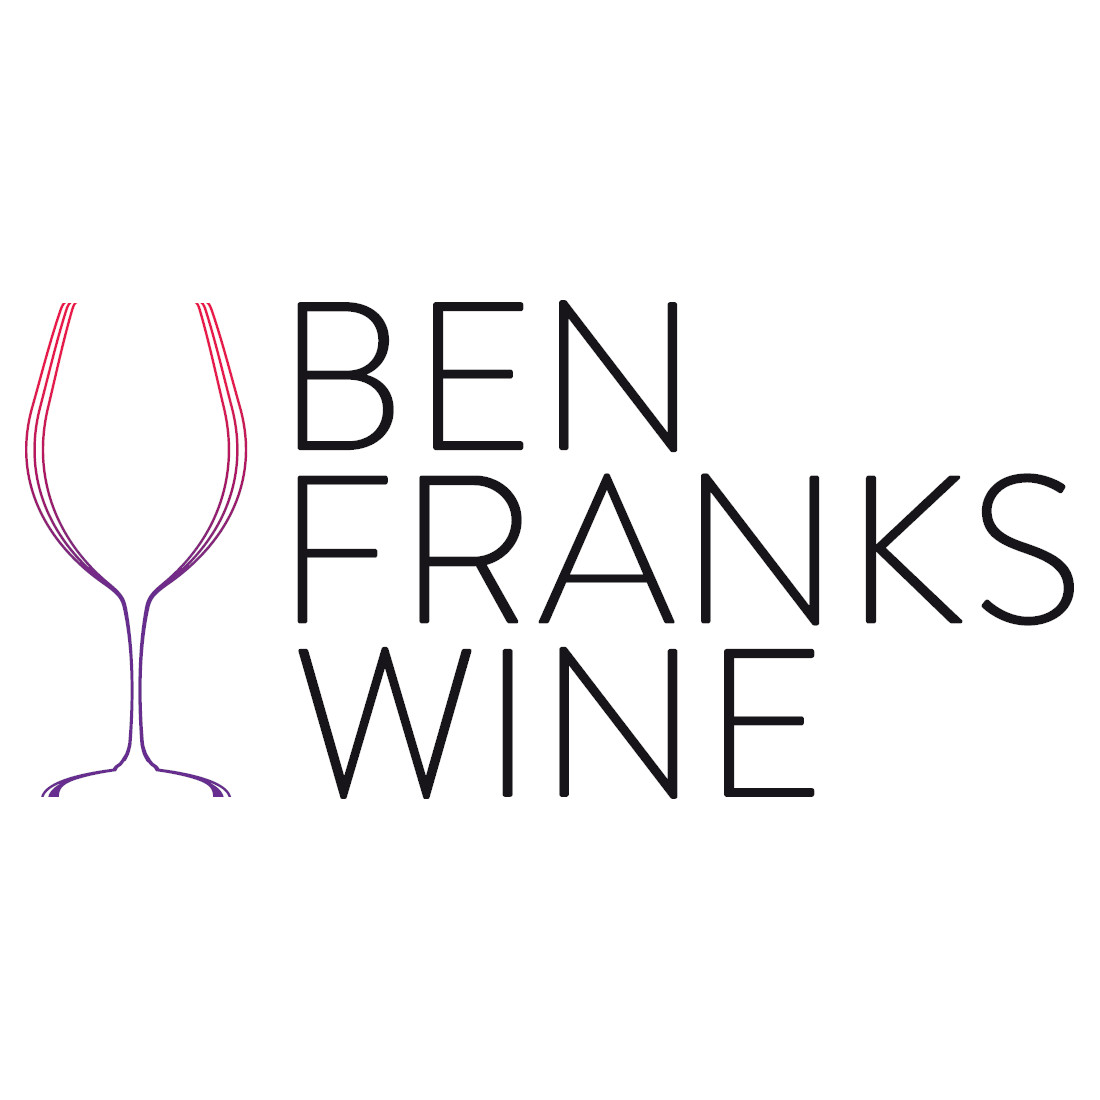 Ben Franks Wine - Expert Brand Builders for Wines and Spirits